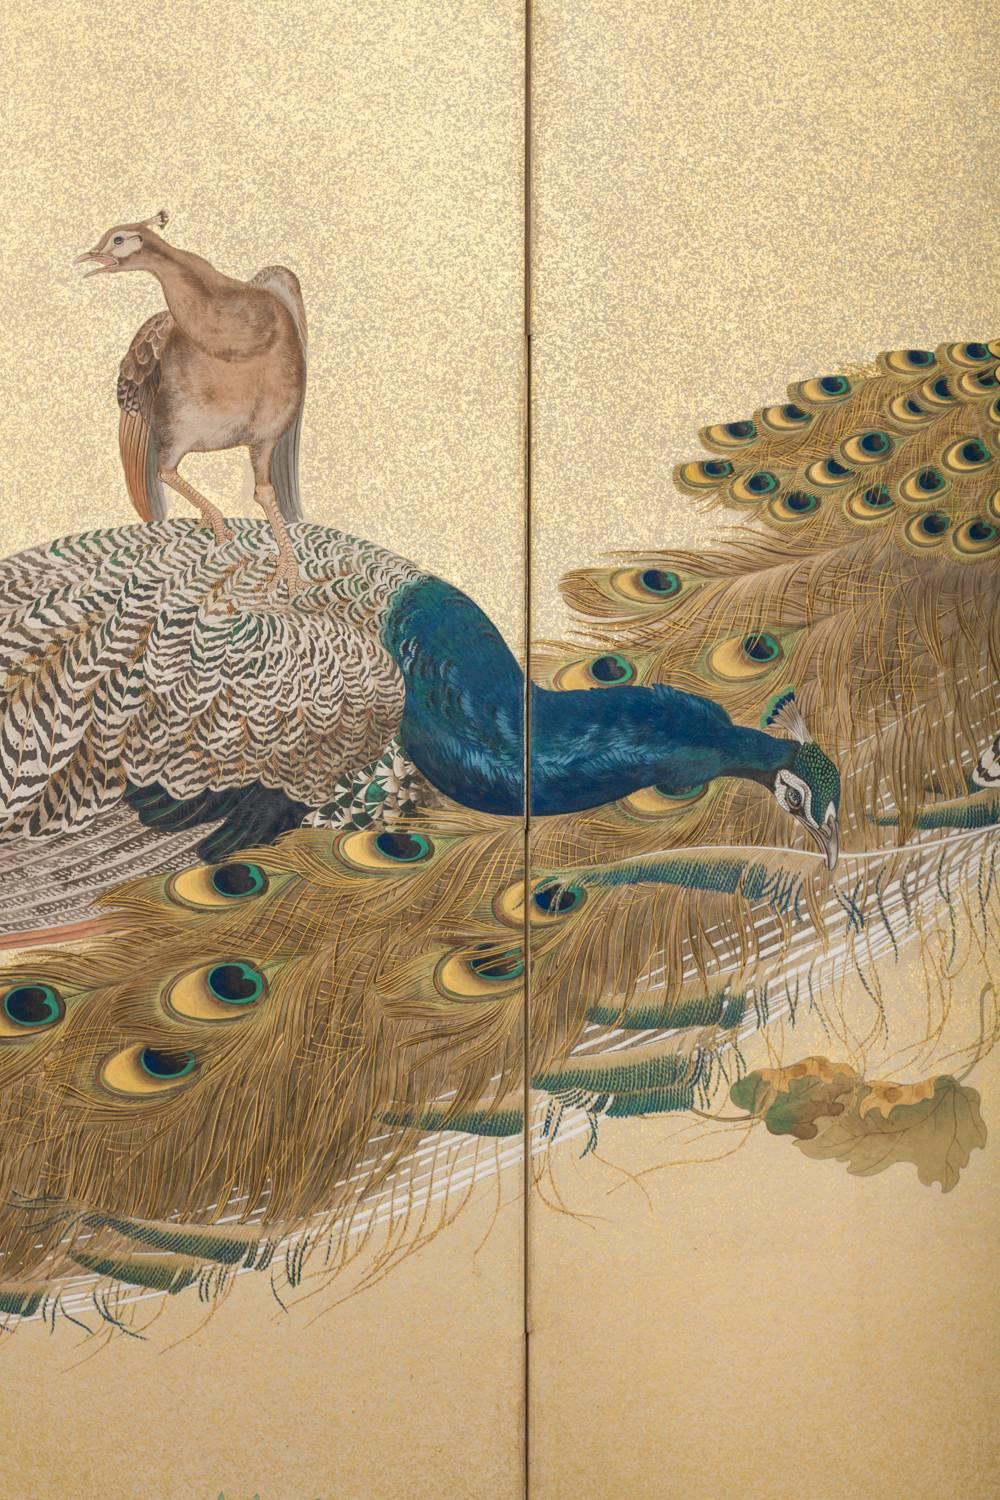 Signed Hosetsu. Taisho period painting, circa 1920
Peafowl are considered a symbol of family prosperity.